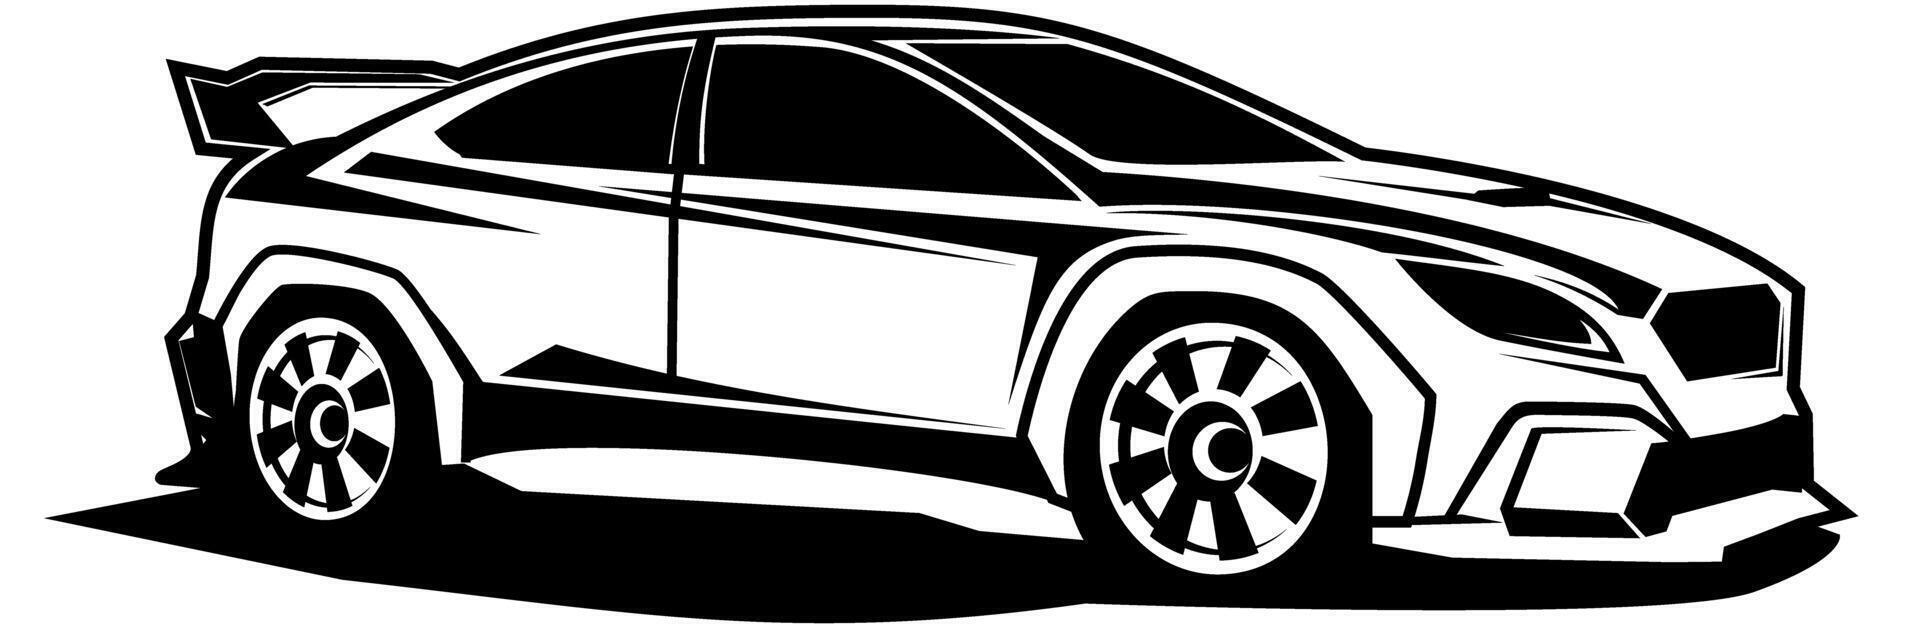 car black and white design vector art